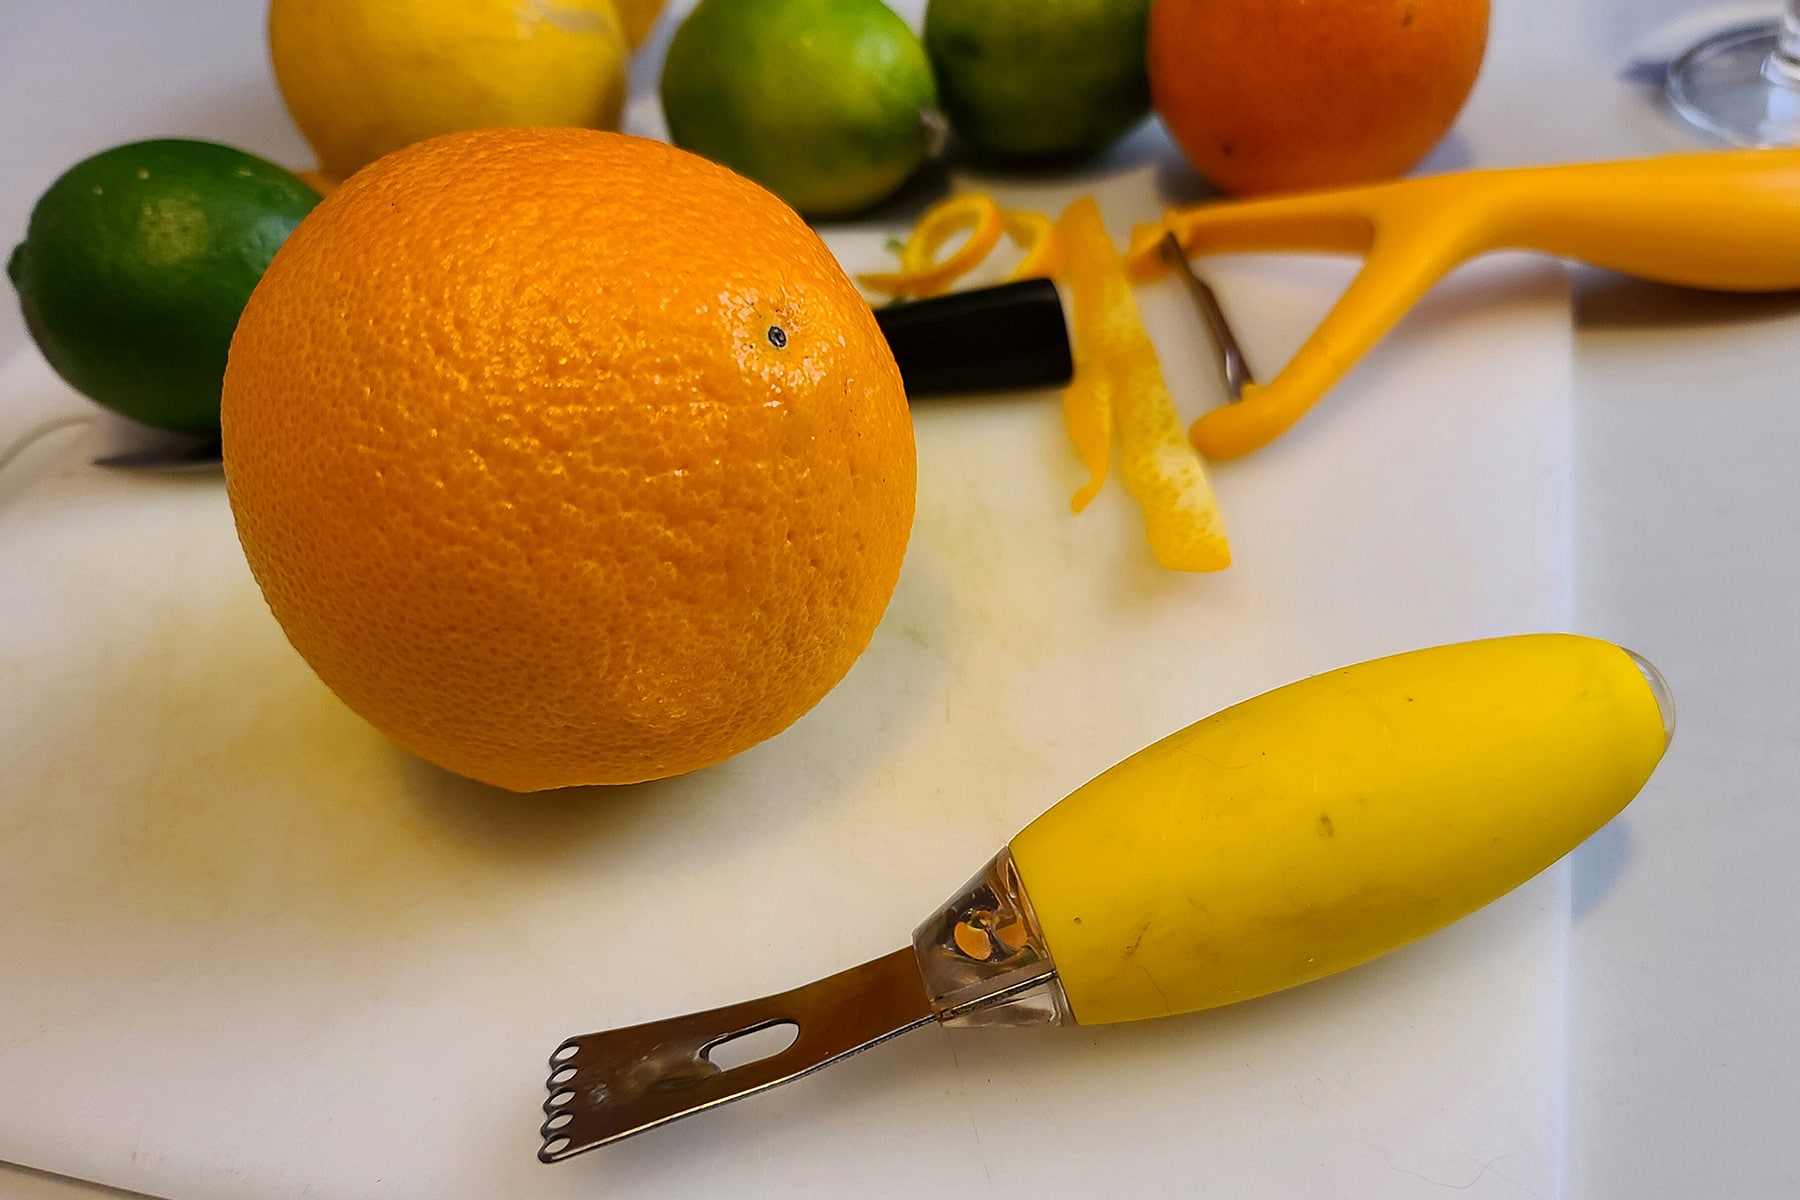 An orange an a channel knife on a cutting board.